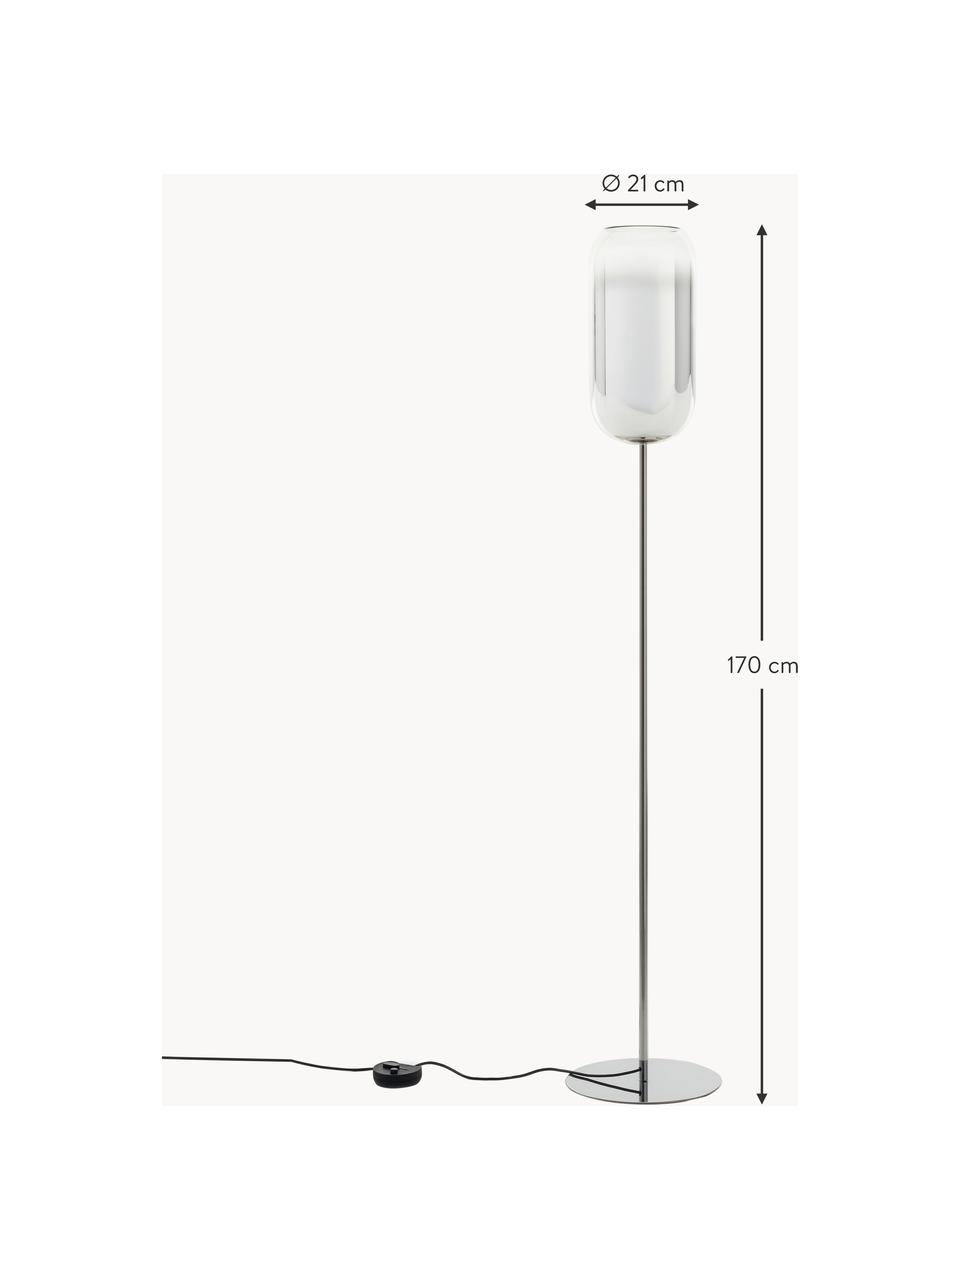 Mondgeblazen vloerlamp Gople, Lampenkap: mondgeblazen glas, Zilverkleurig, H 170 cm